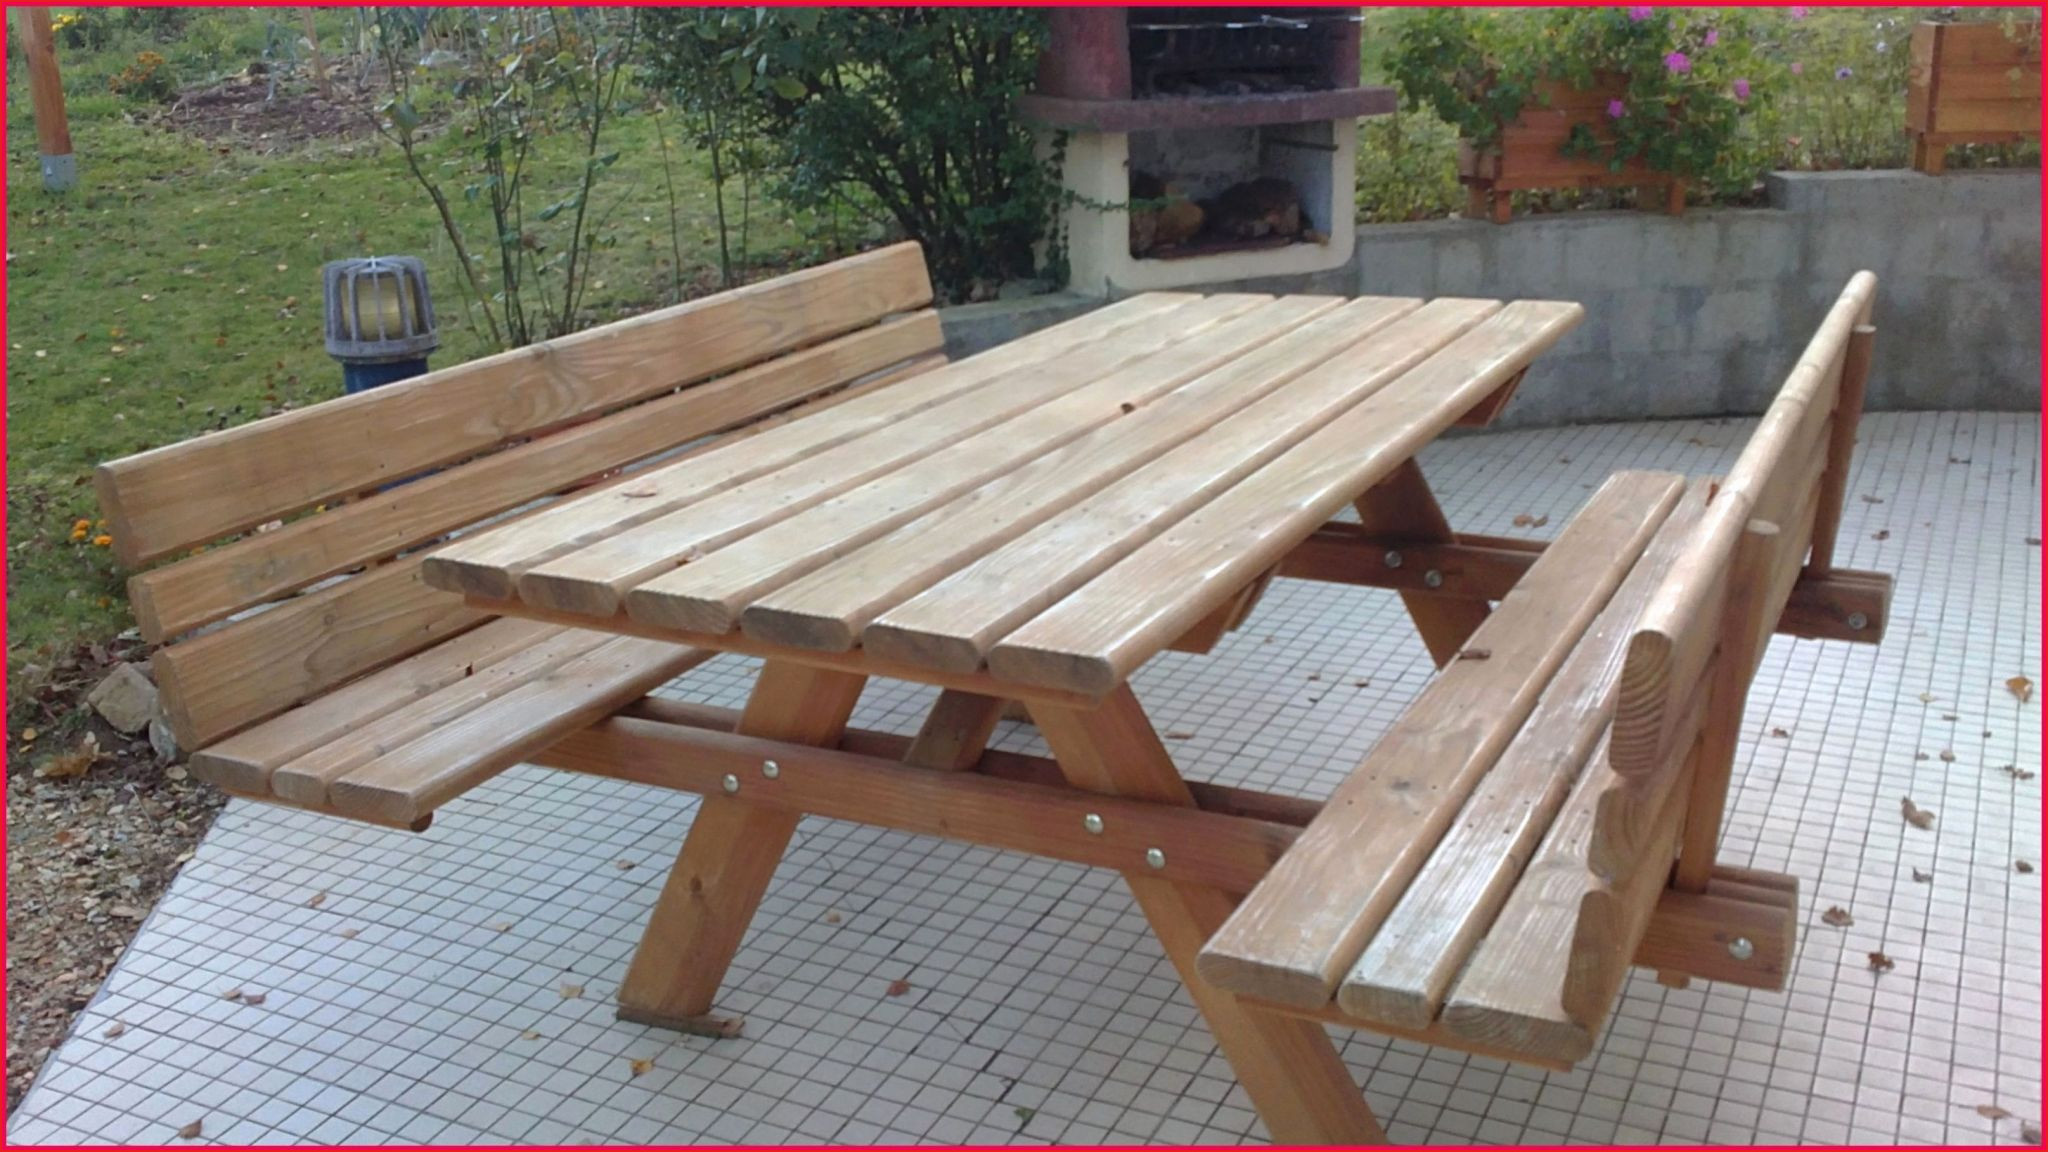 Table de jardin avec toit en bois